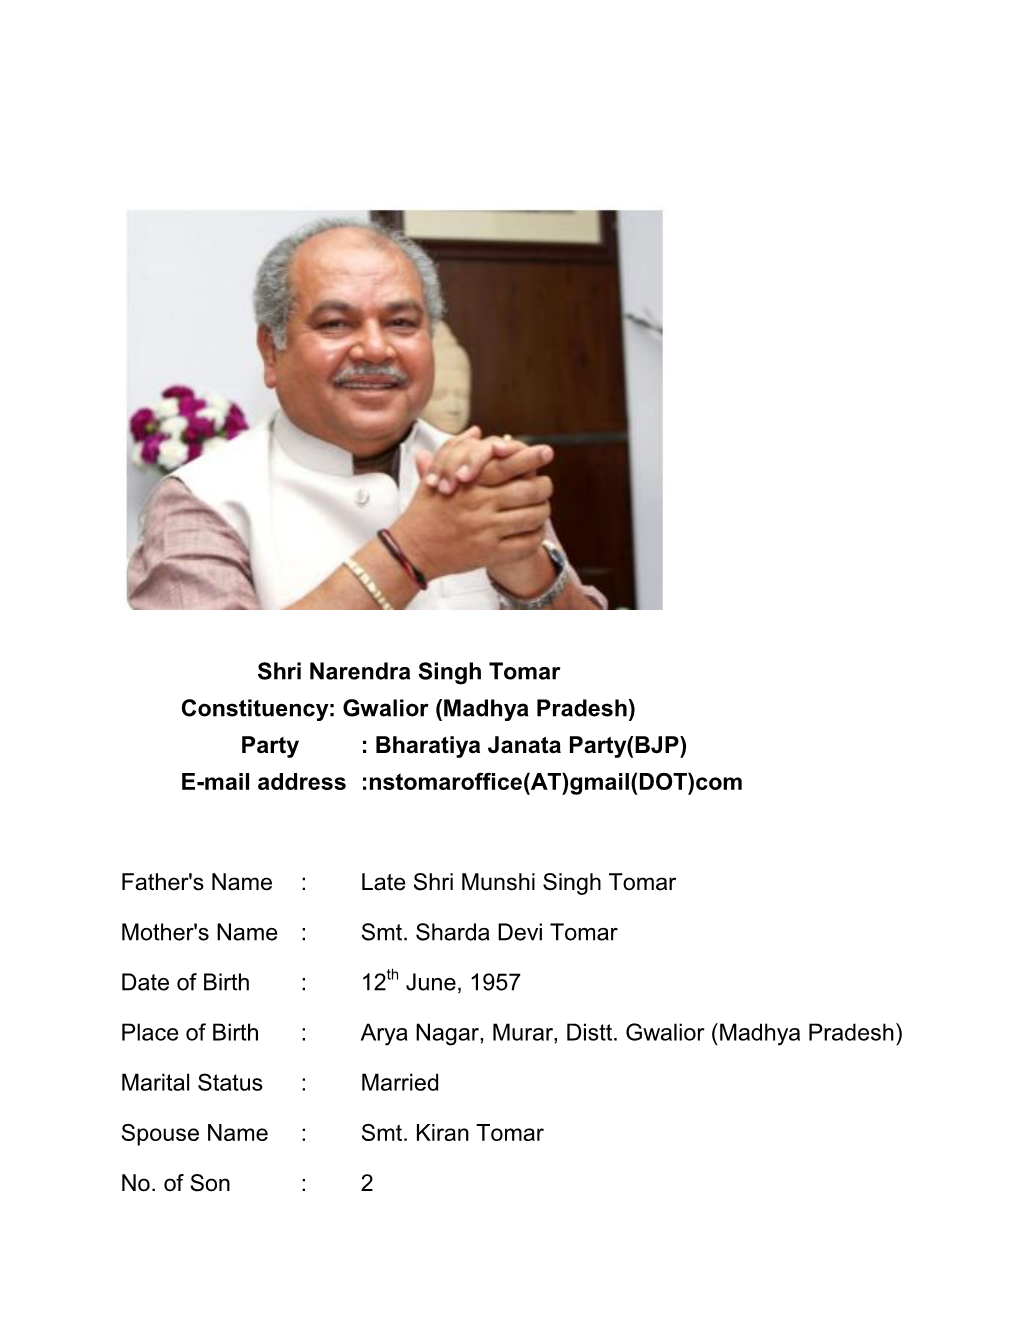 Shri Narendra Singh Tomar Constituency: Gwalior (Madhya Pradesh) Party : Bharatiya Janata Party(BJP) E-Mail Address :Nstomaroffice(AT)Gmail(DOT)Com